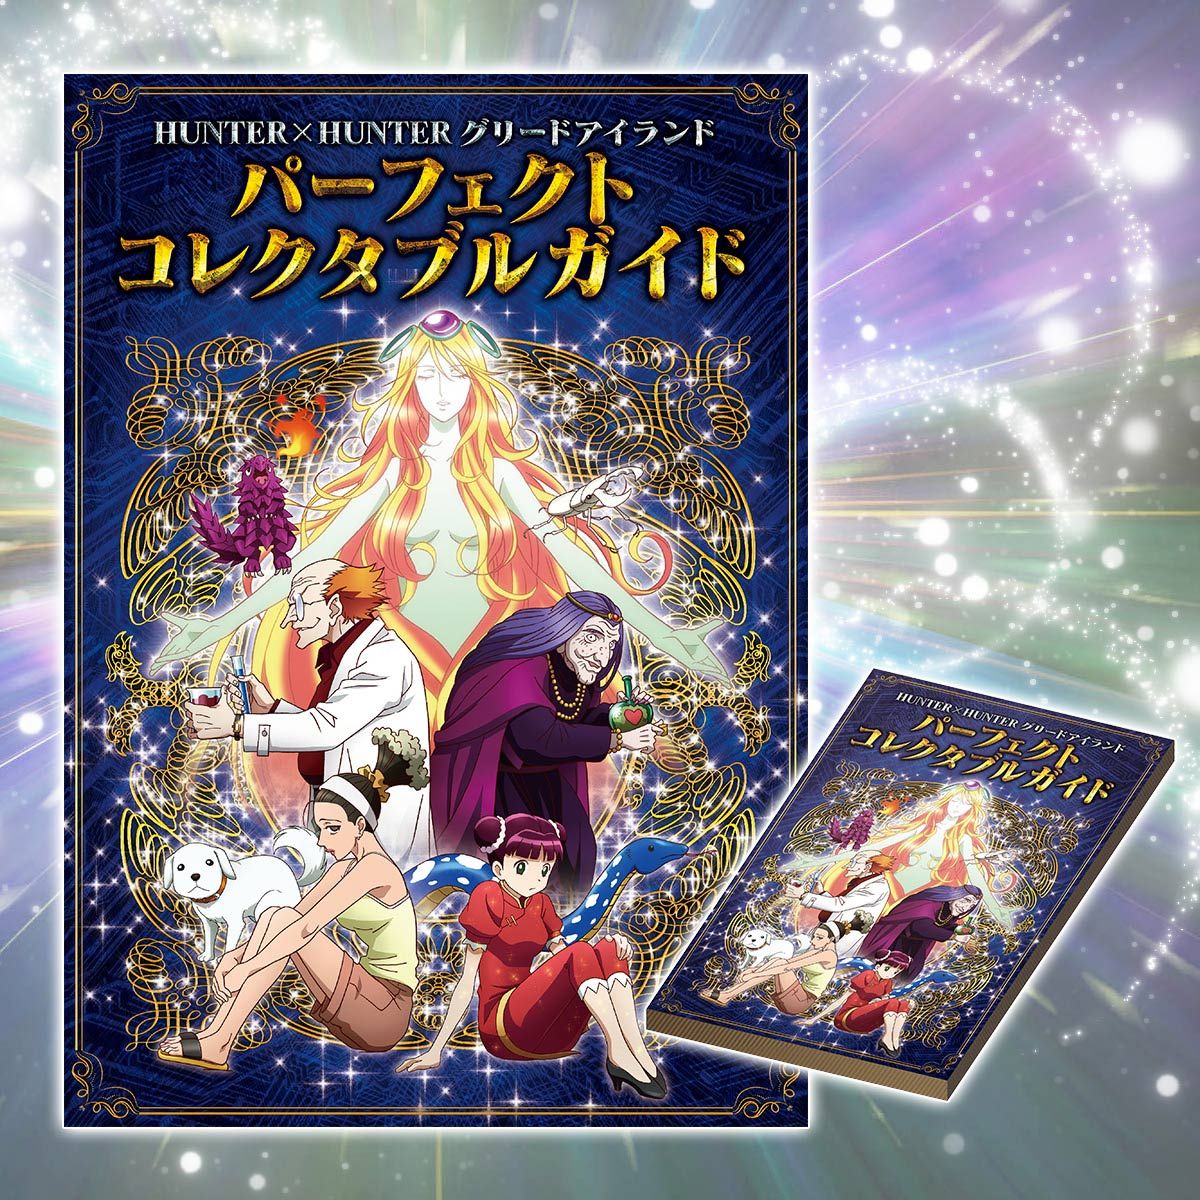 Bandai HUNTER x HUNTER Carddass Premium Edition limited JAPAN FS